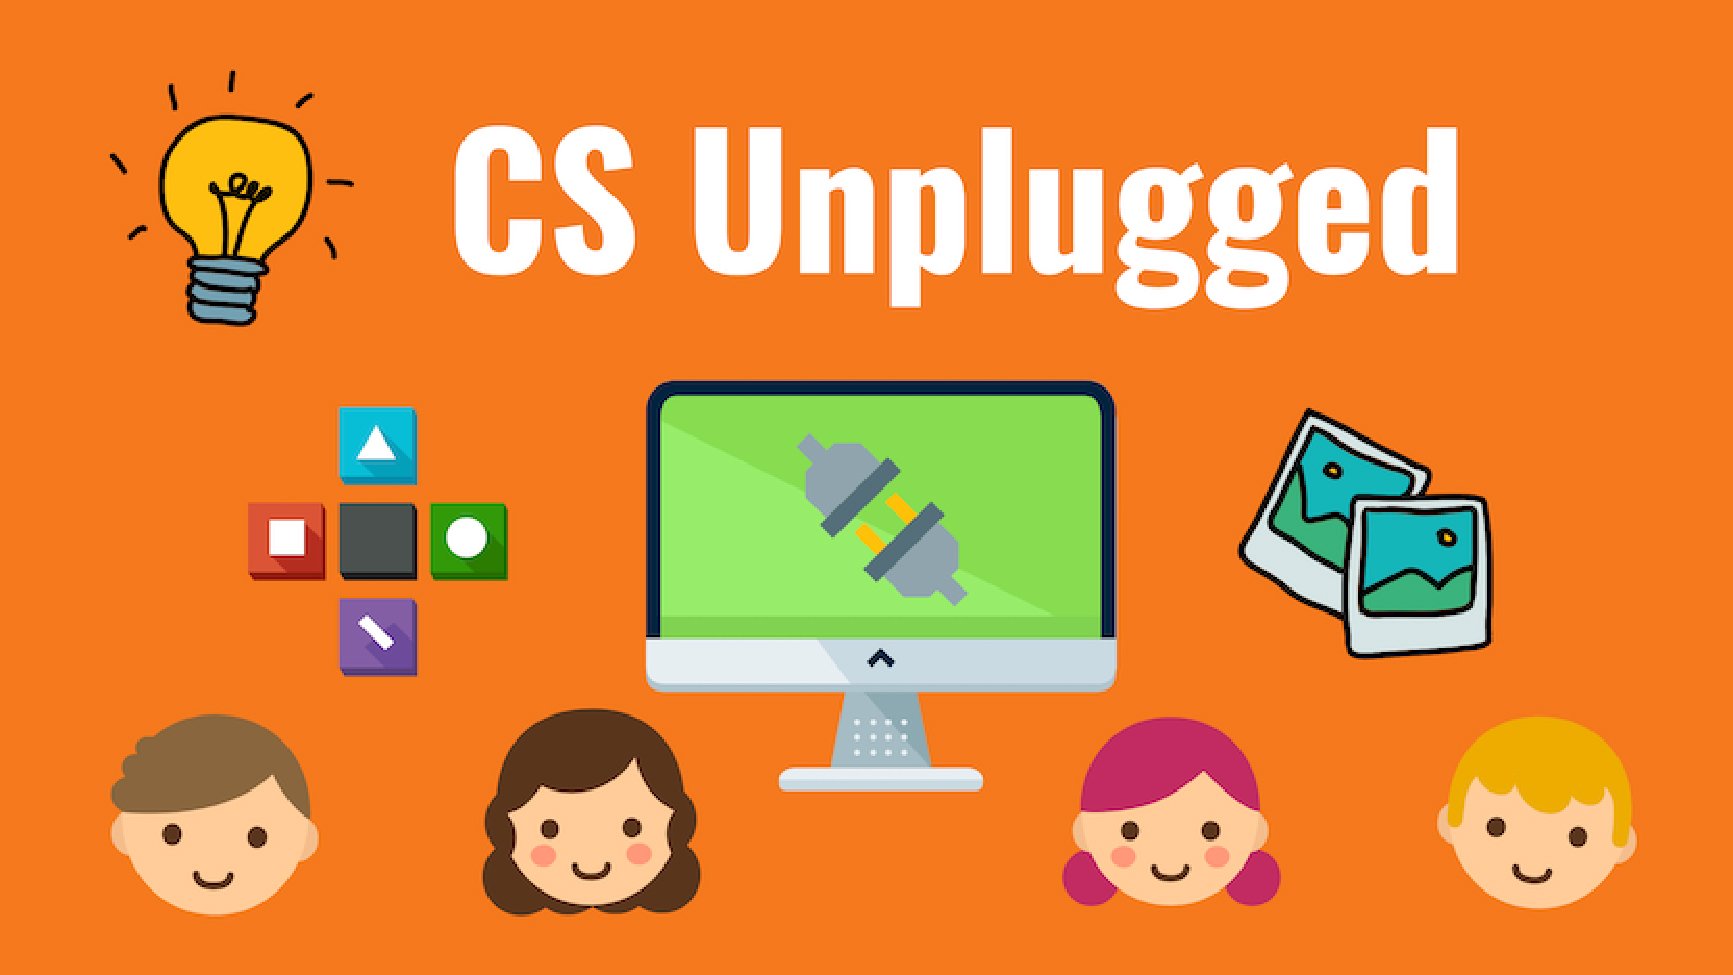 CS Unplugged เรียน Coding โดยไม่ใช้คอมพิวเตอร์